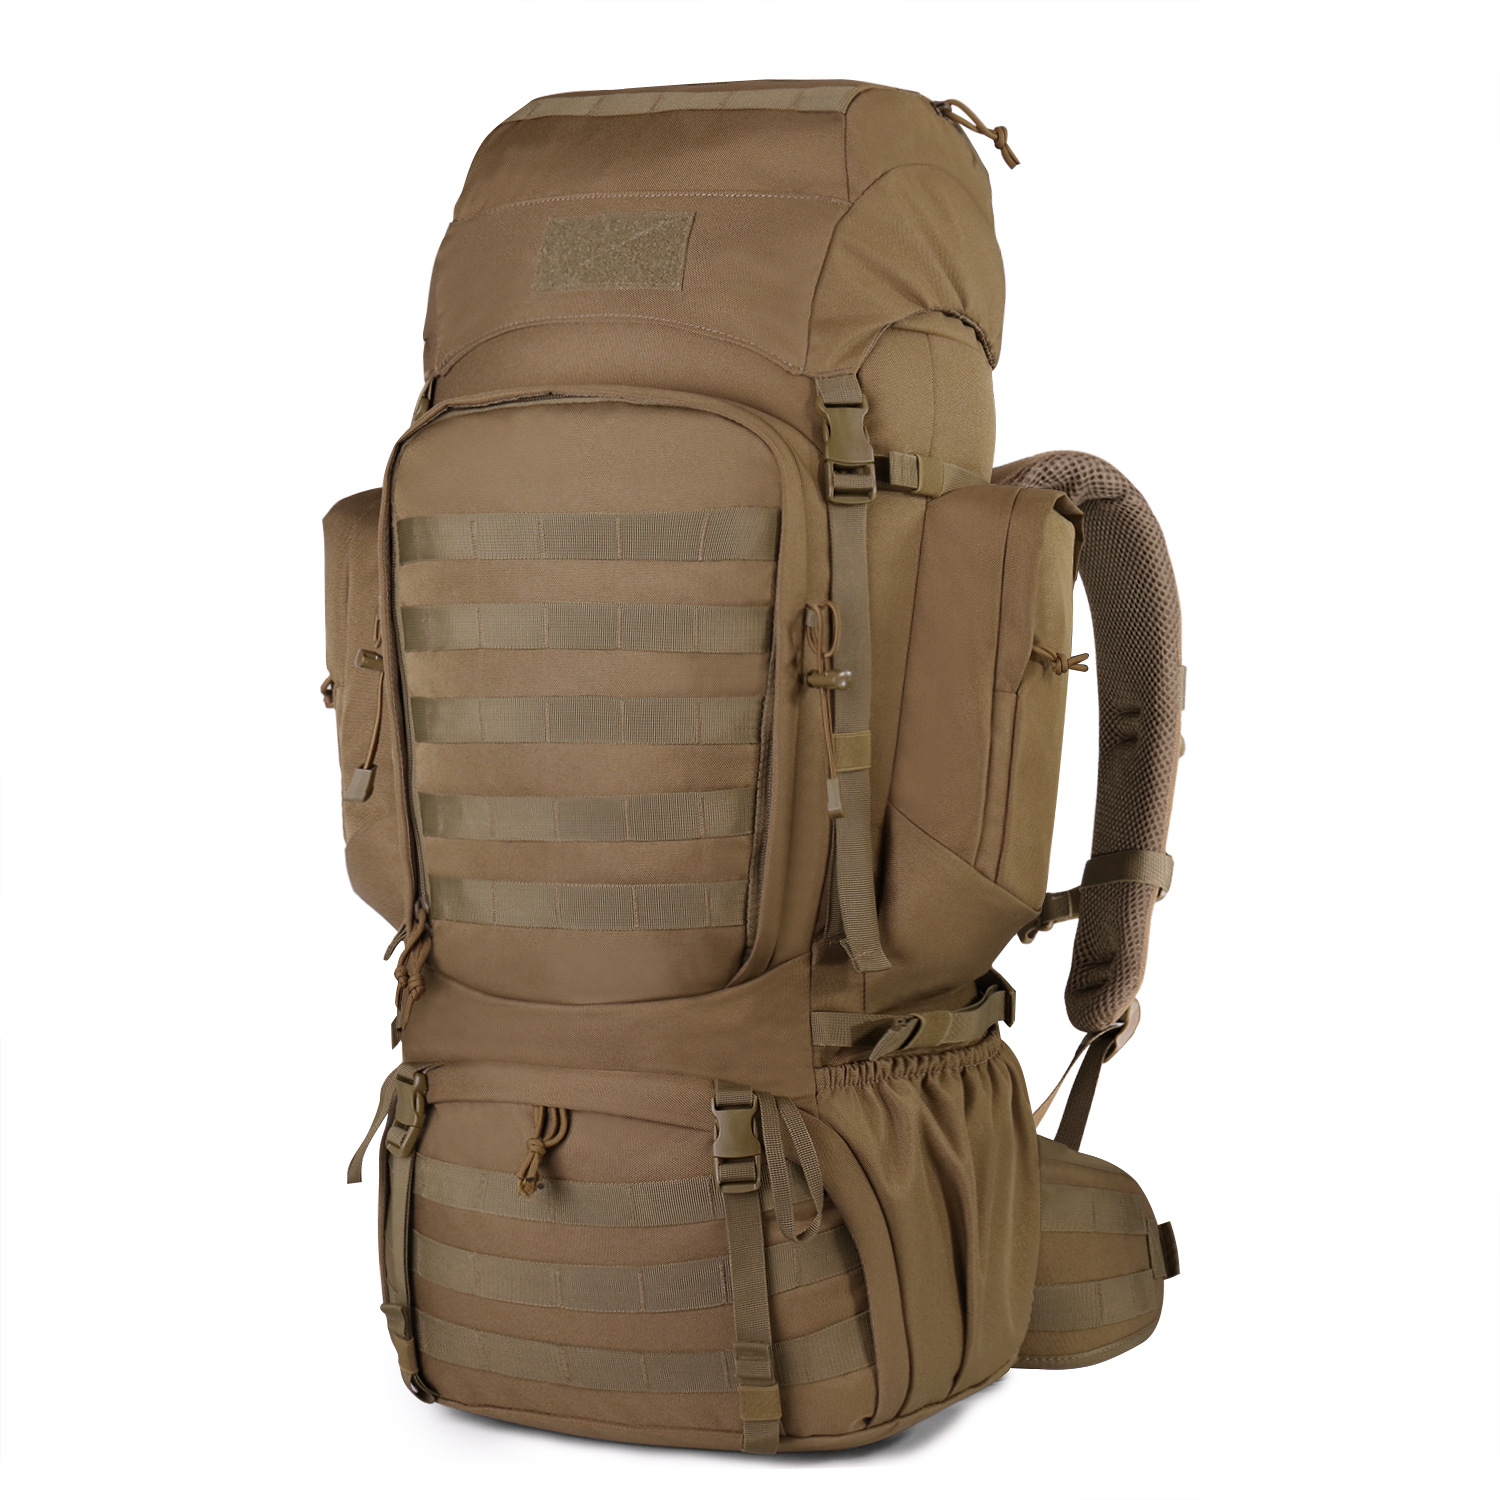 Recreational large capacity combat military fanpack hiking camping tactics shoulder 60L sports backpack hiking backpack